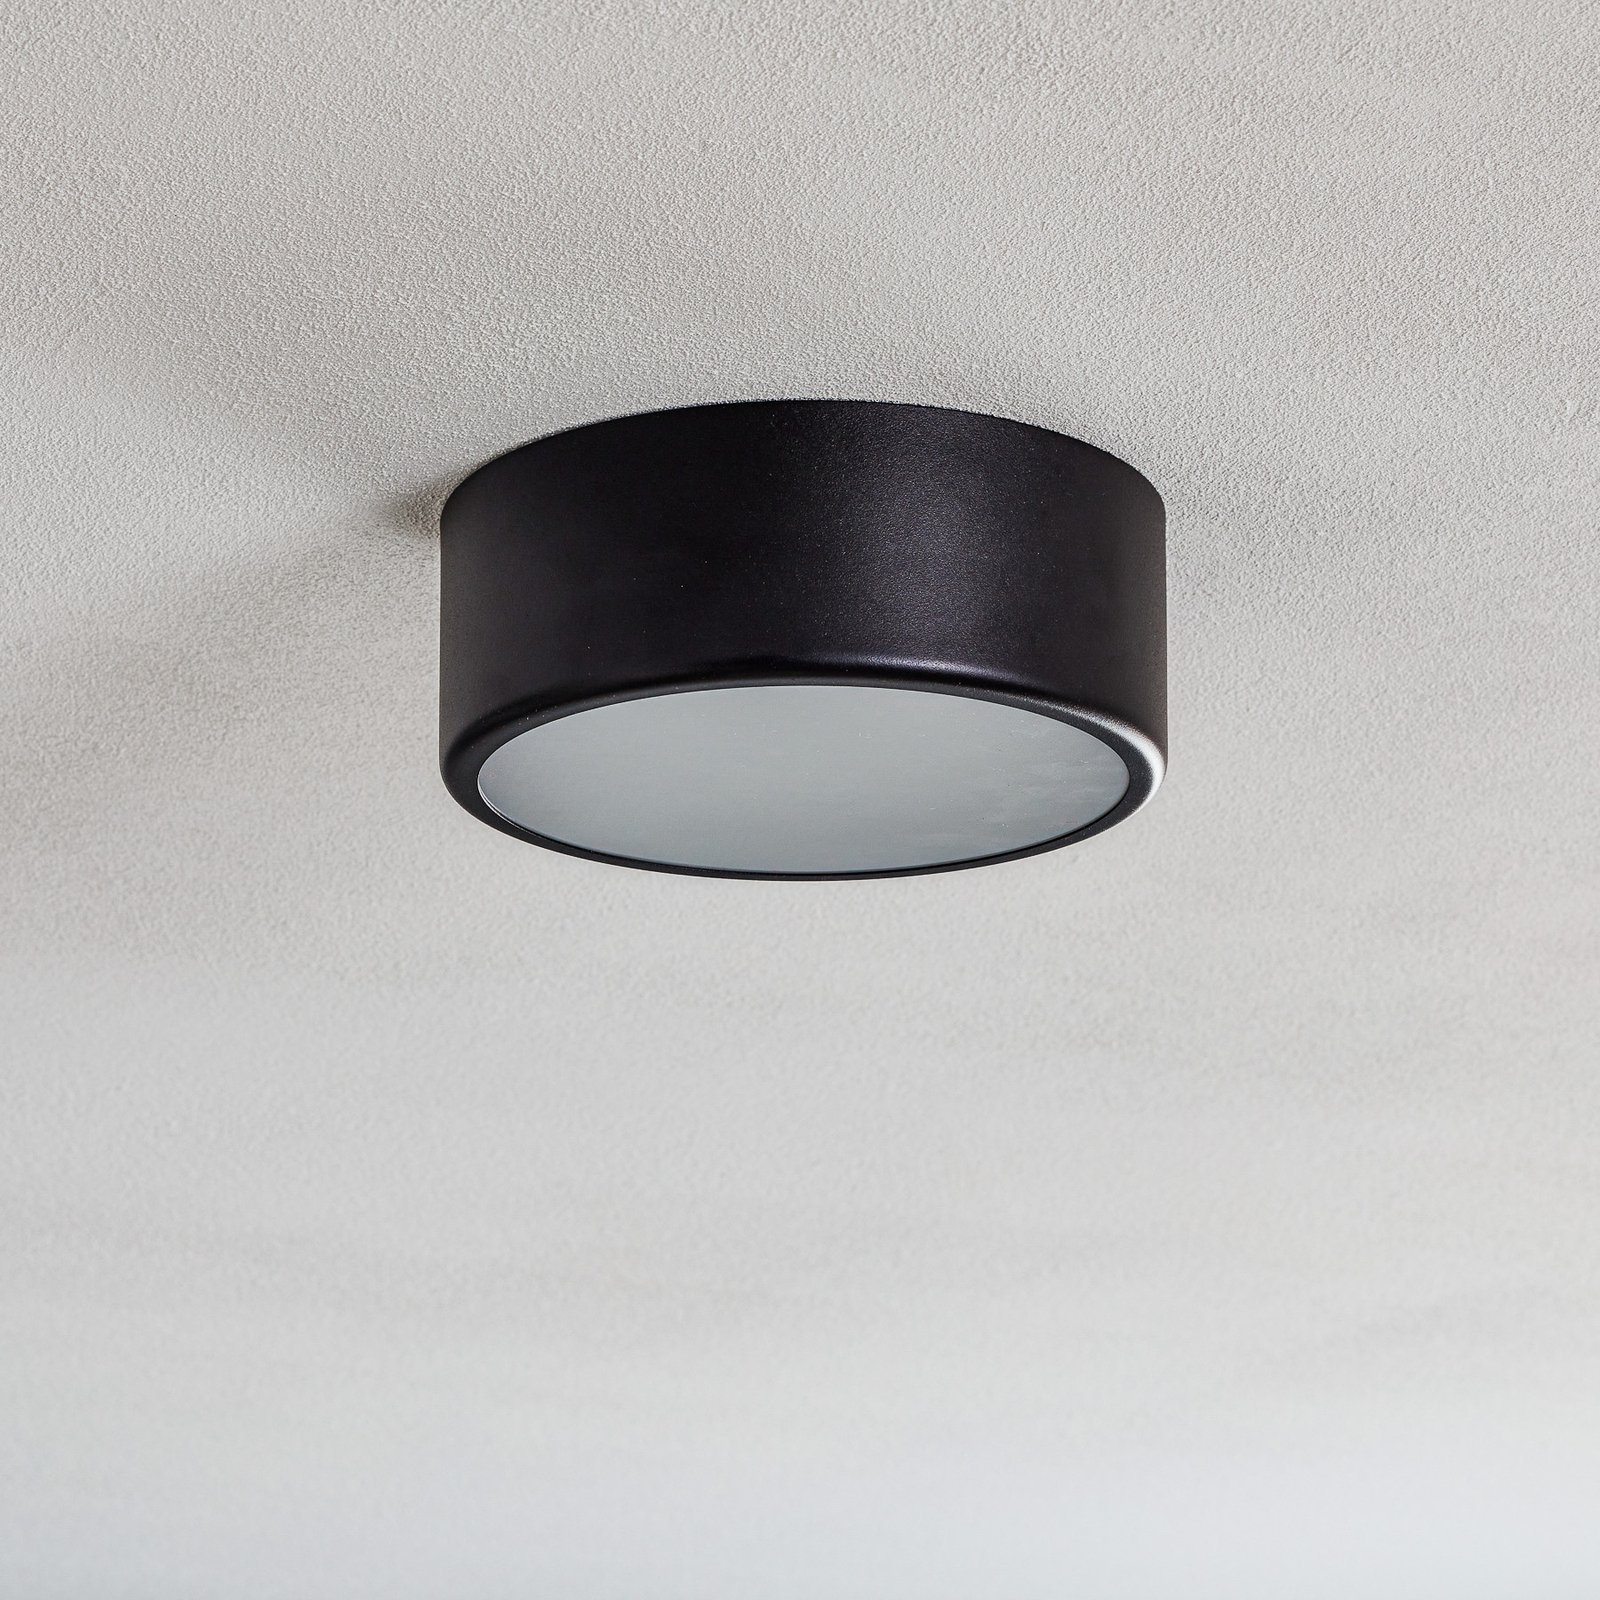 Cleo ceiling light, Ø 20 cm, black